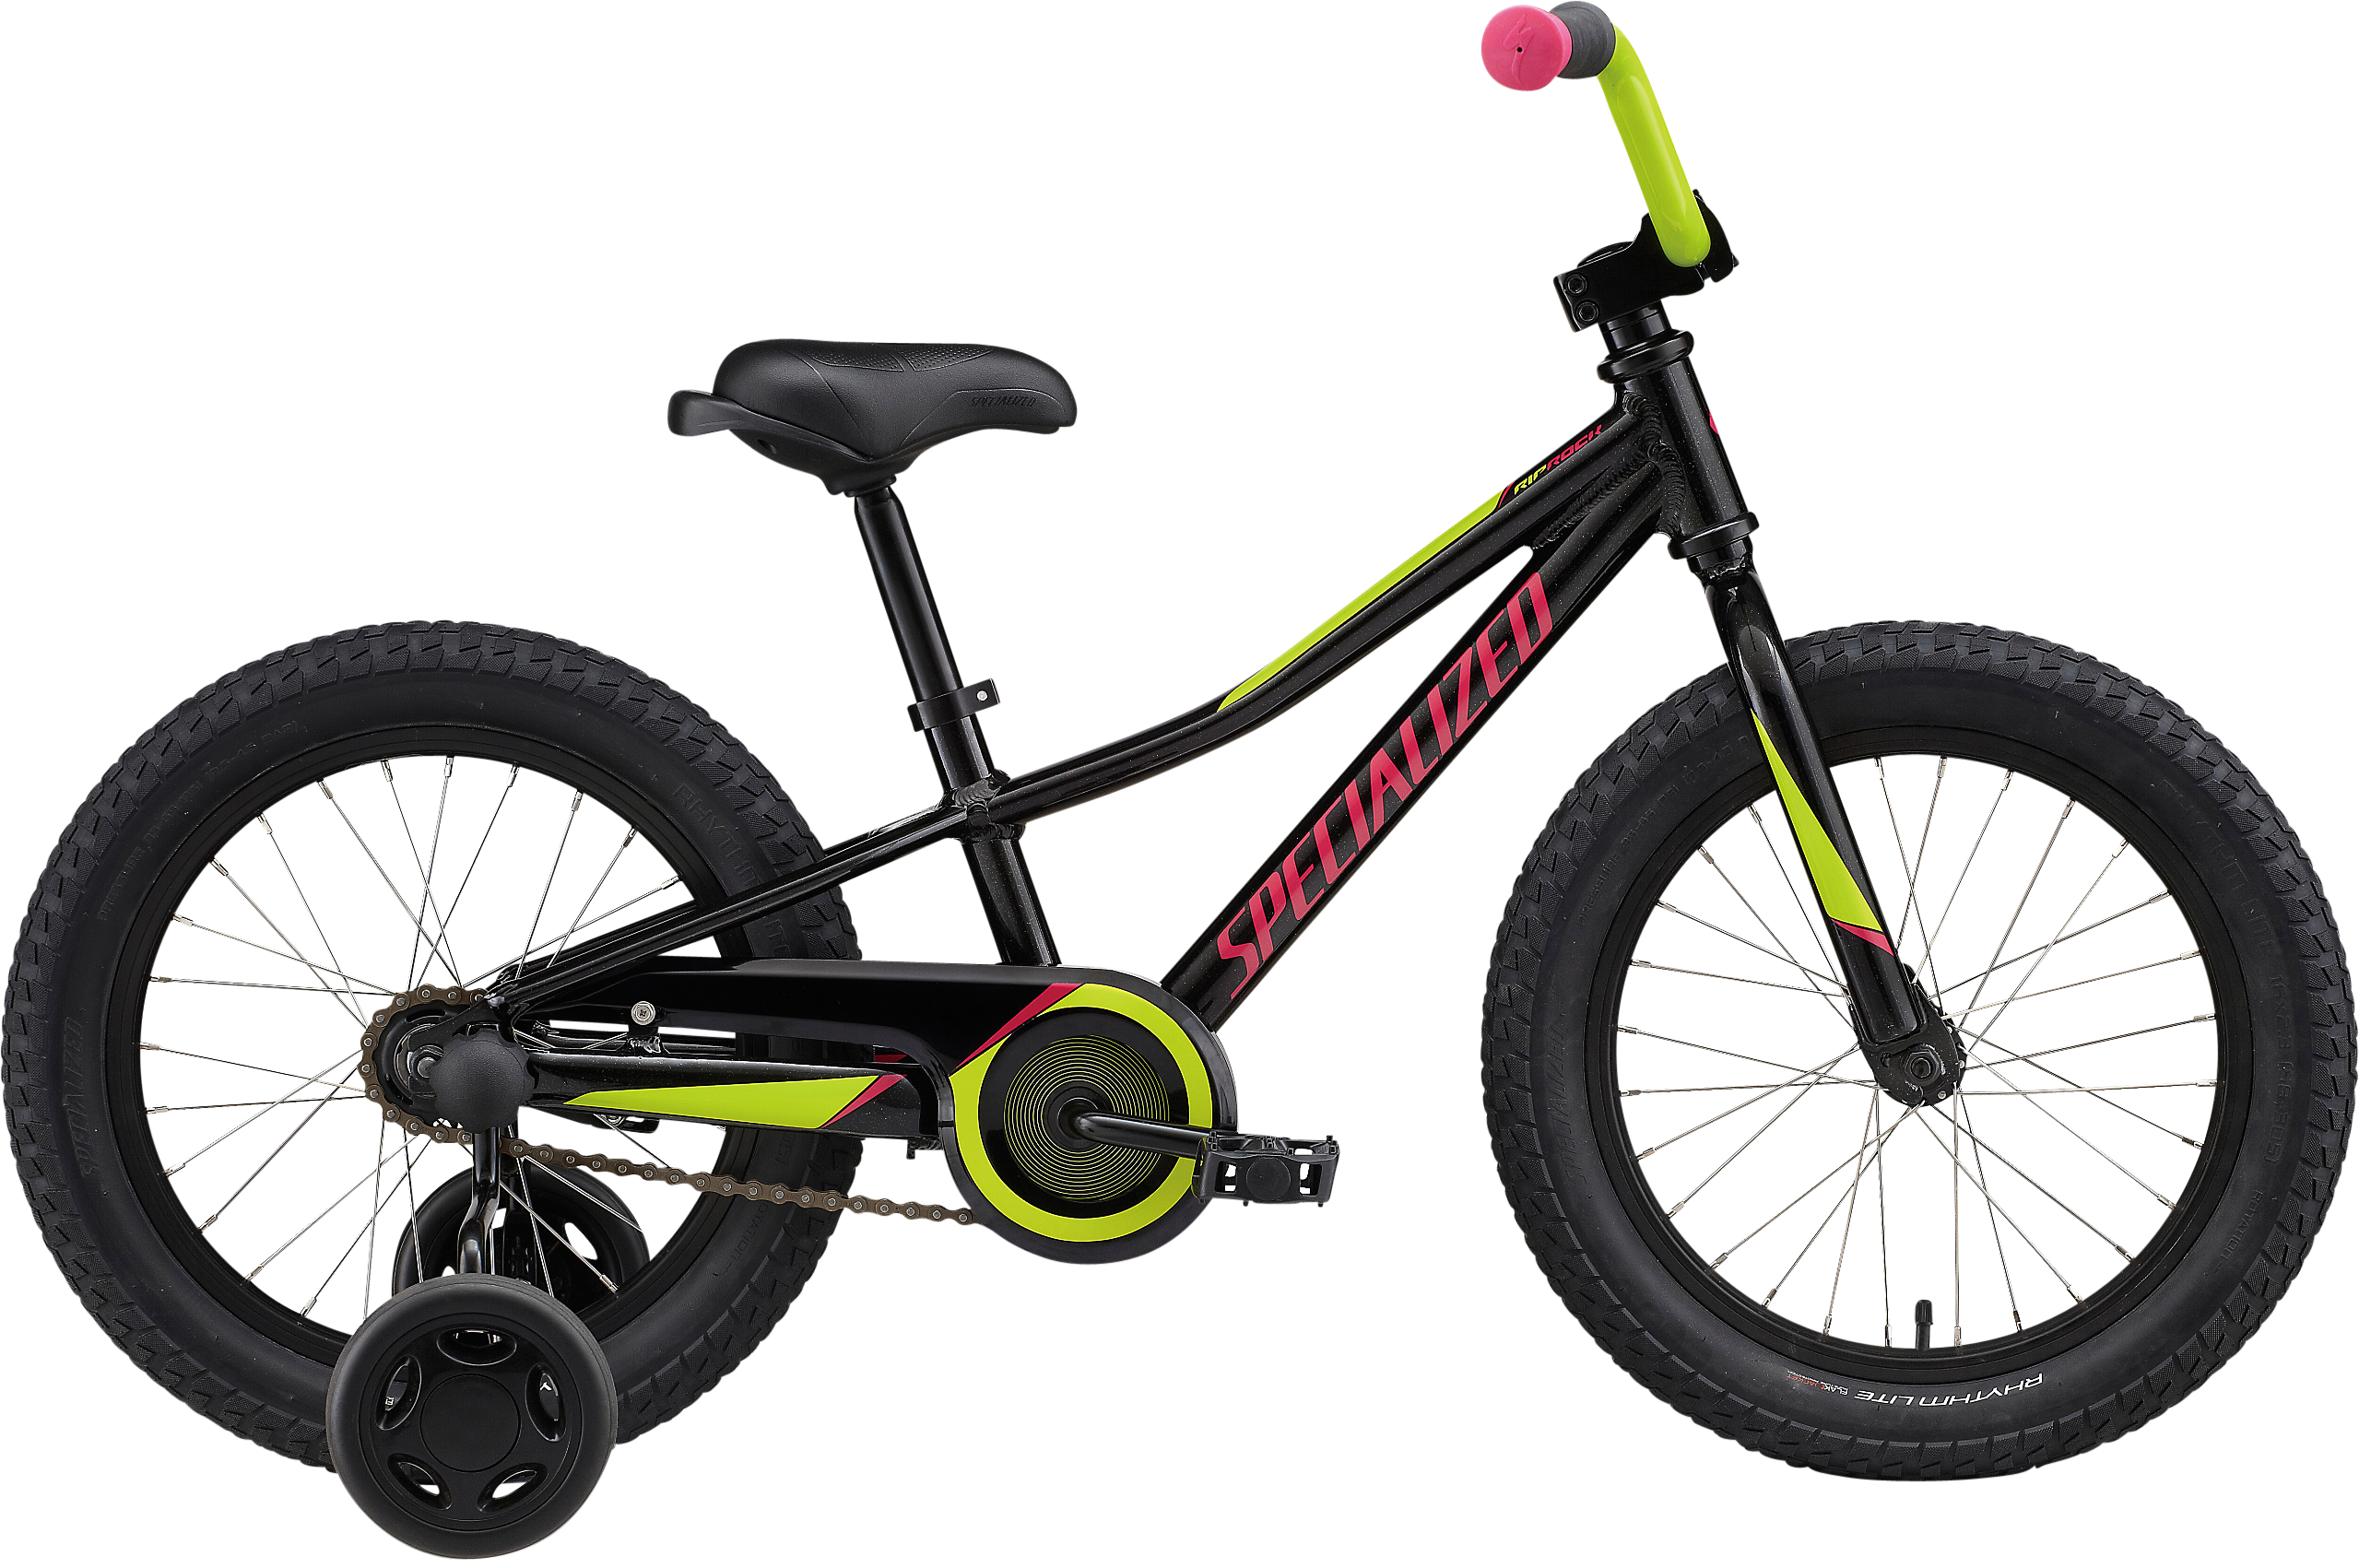 Bicicleta niño 4 a 7 años – 16″ – SPECIALIZED RIPROCK COASTER 16 – GLOSS  PURPLE HAZE / LAGOON BLUE – THEBIKE